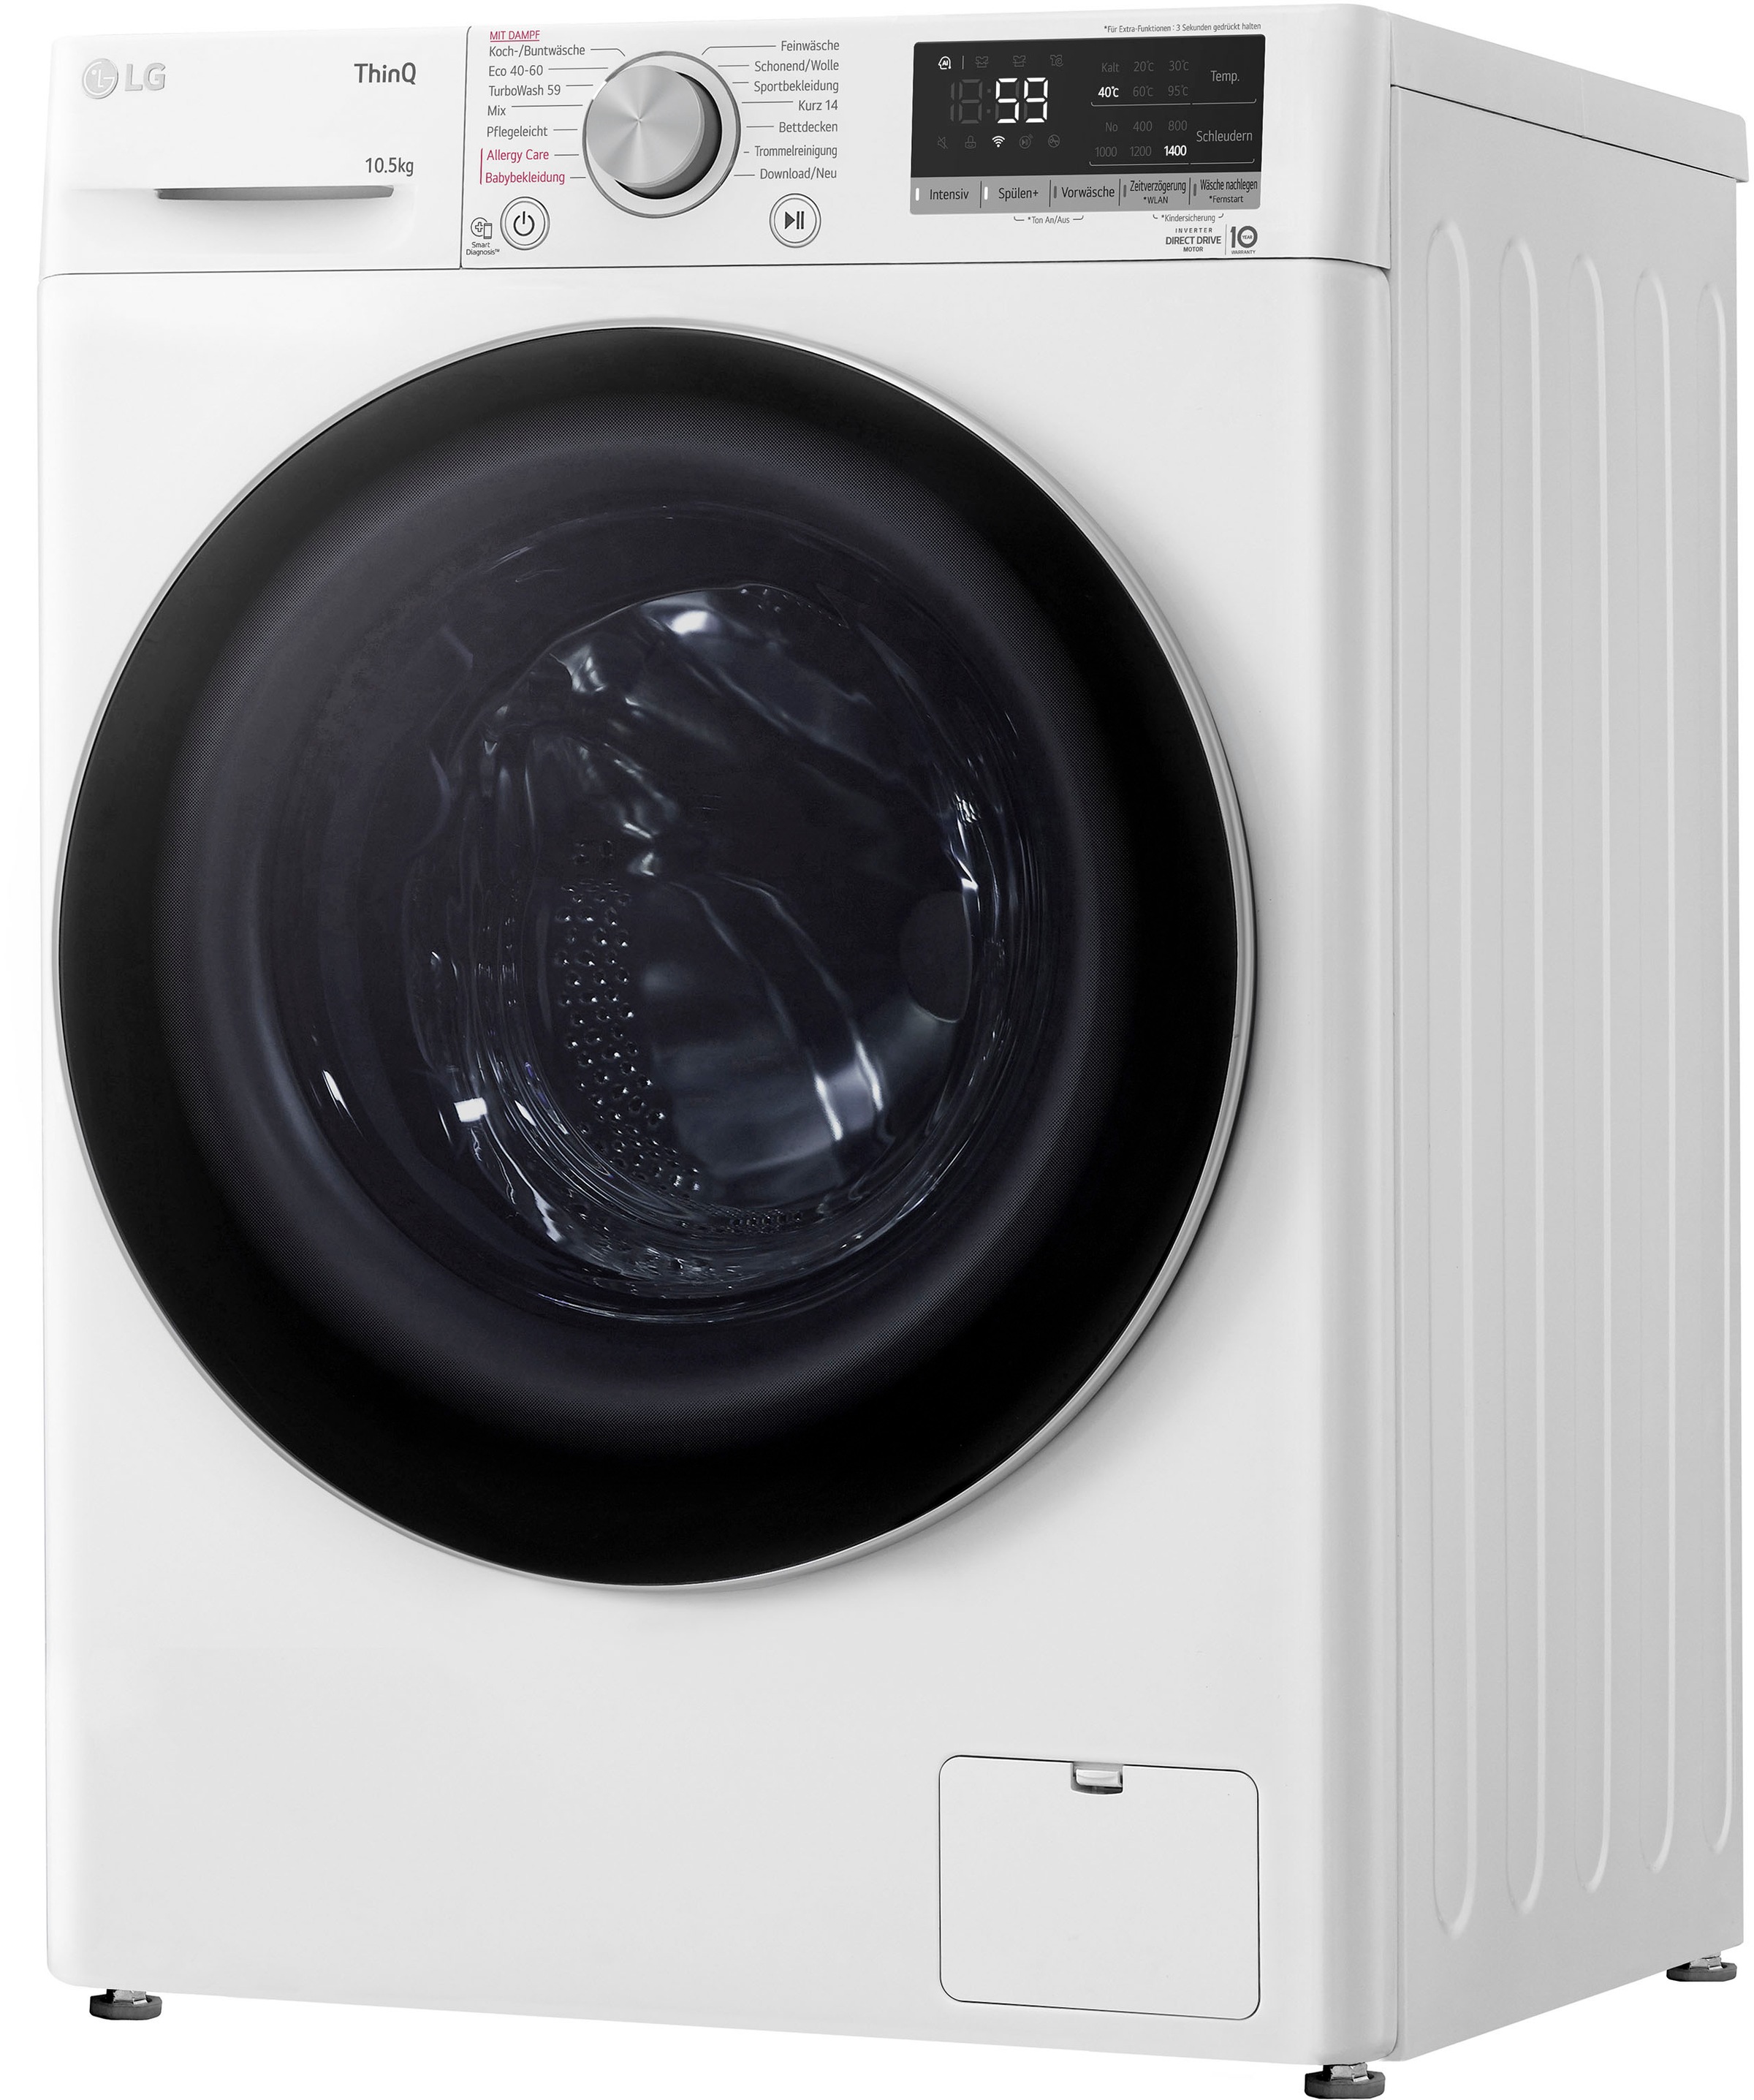 10,5 »F4WV70X1«, auf Waschmaschine Rechnung | F4WV70X1, kg, BAUR 1400 LG U/min